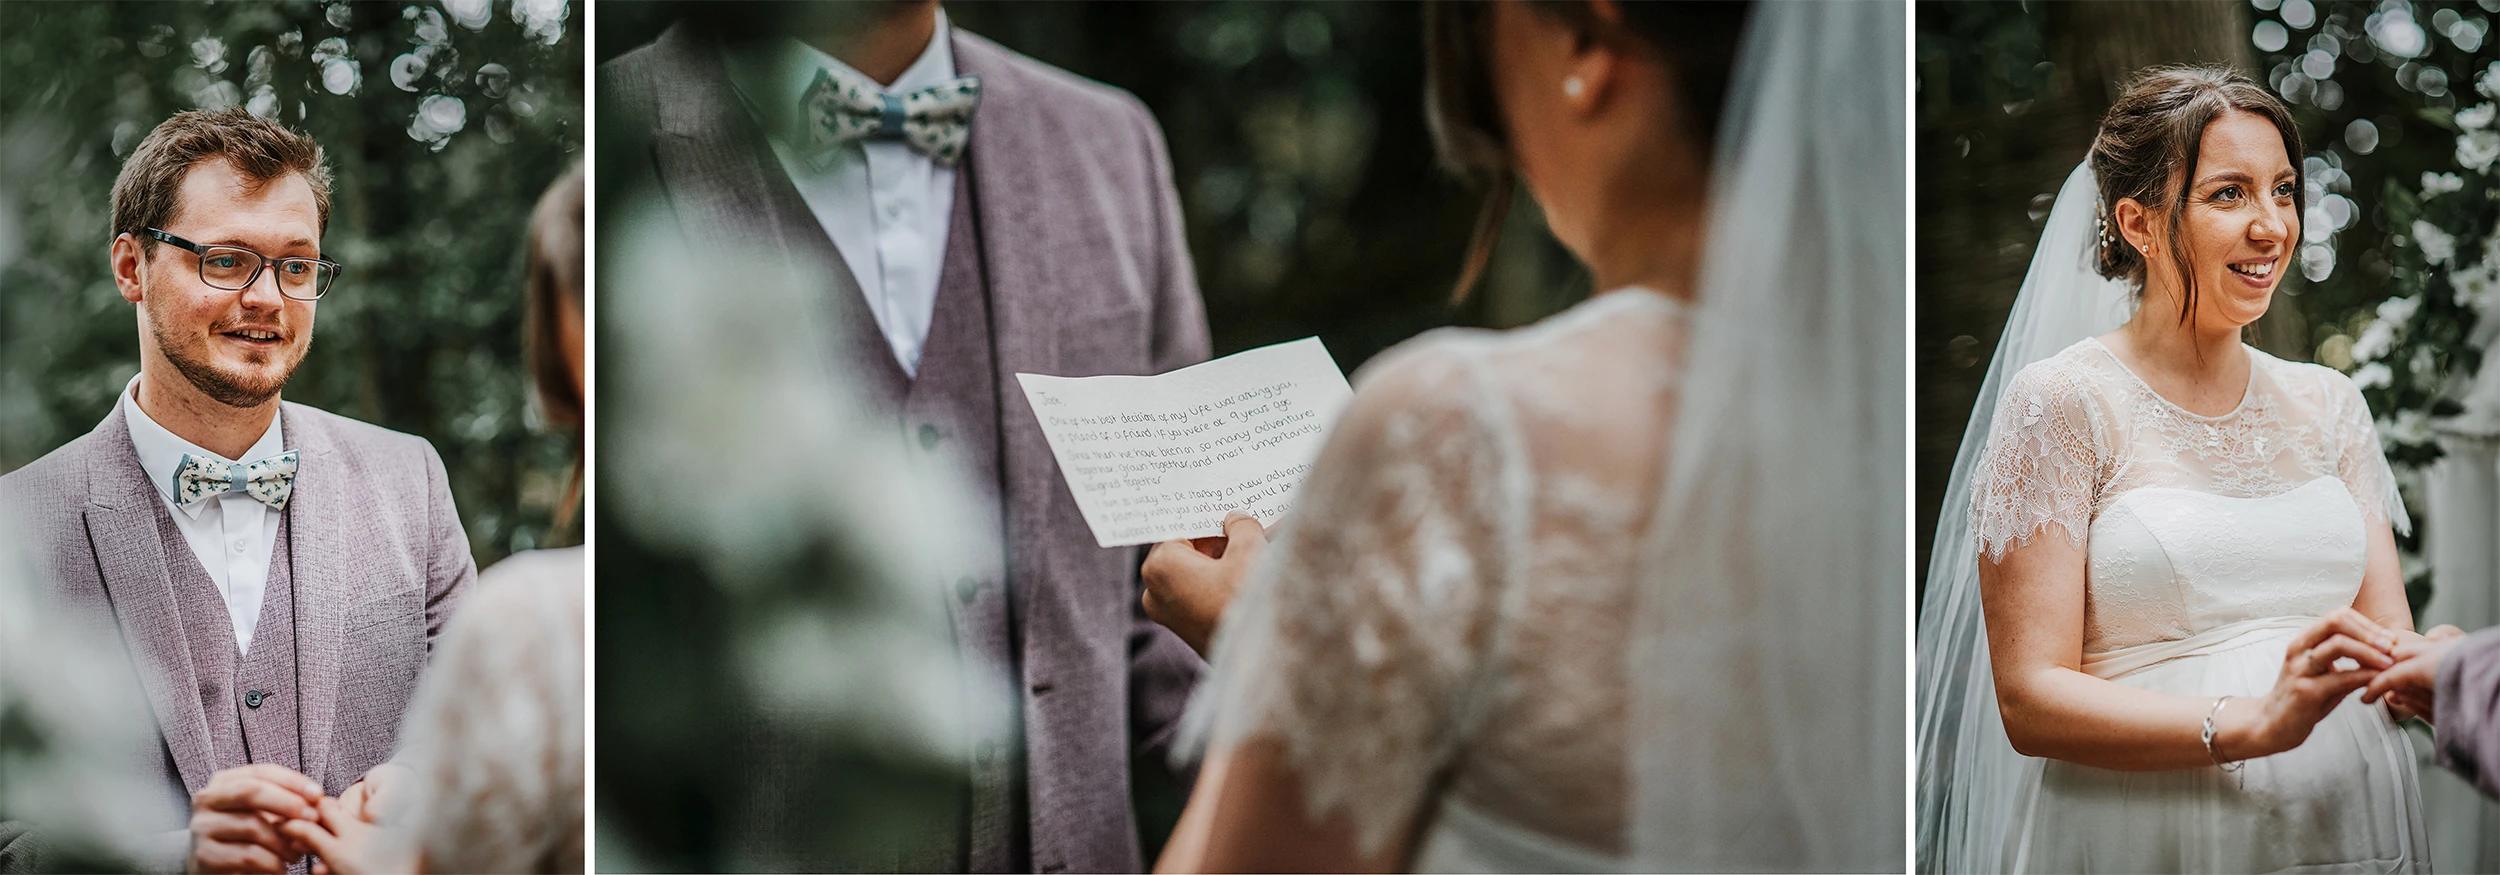 Groom exchanging ring to bride at Upthorpe Woods, Suffolk, UK.